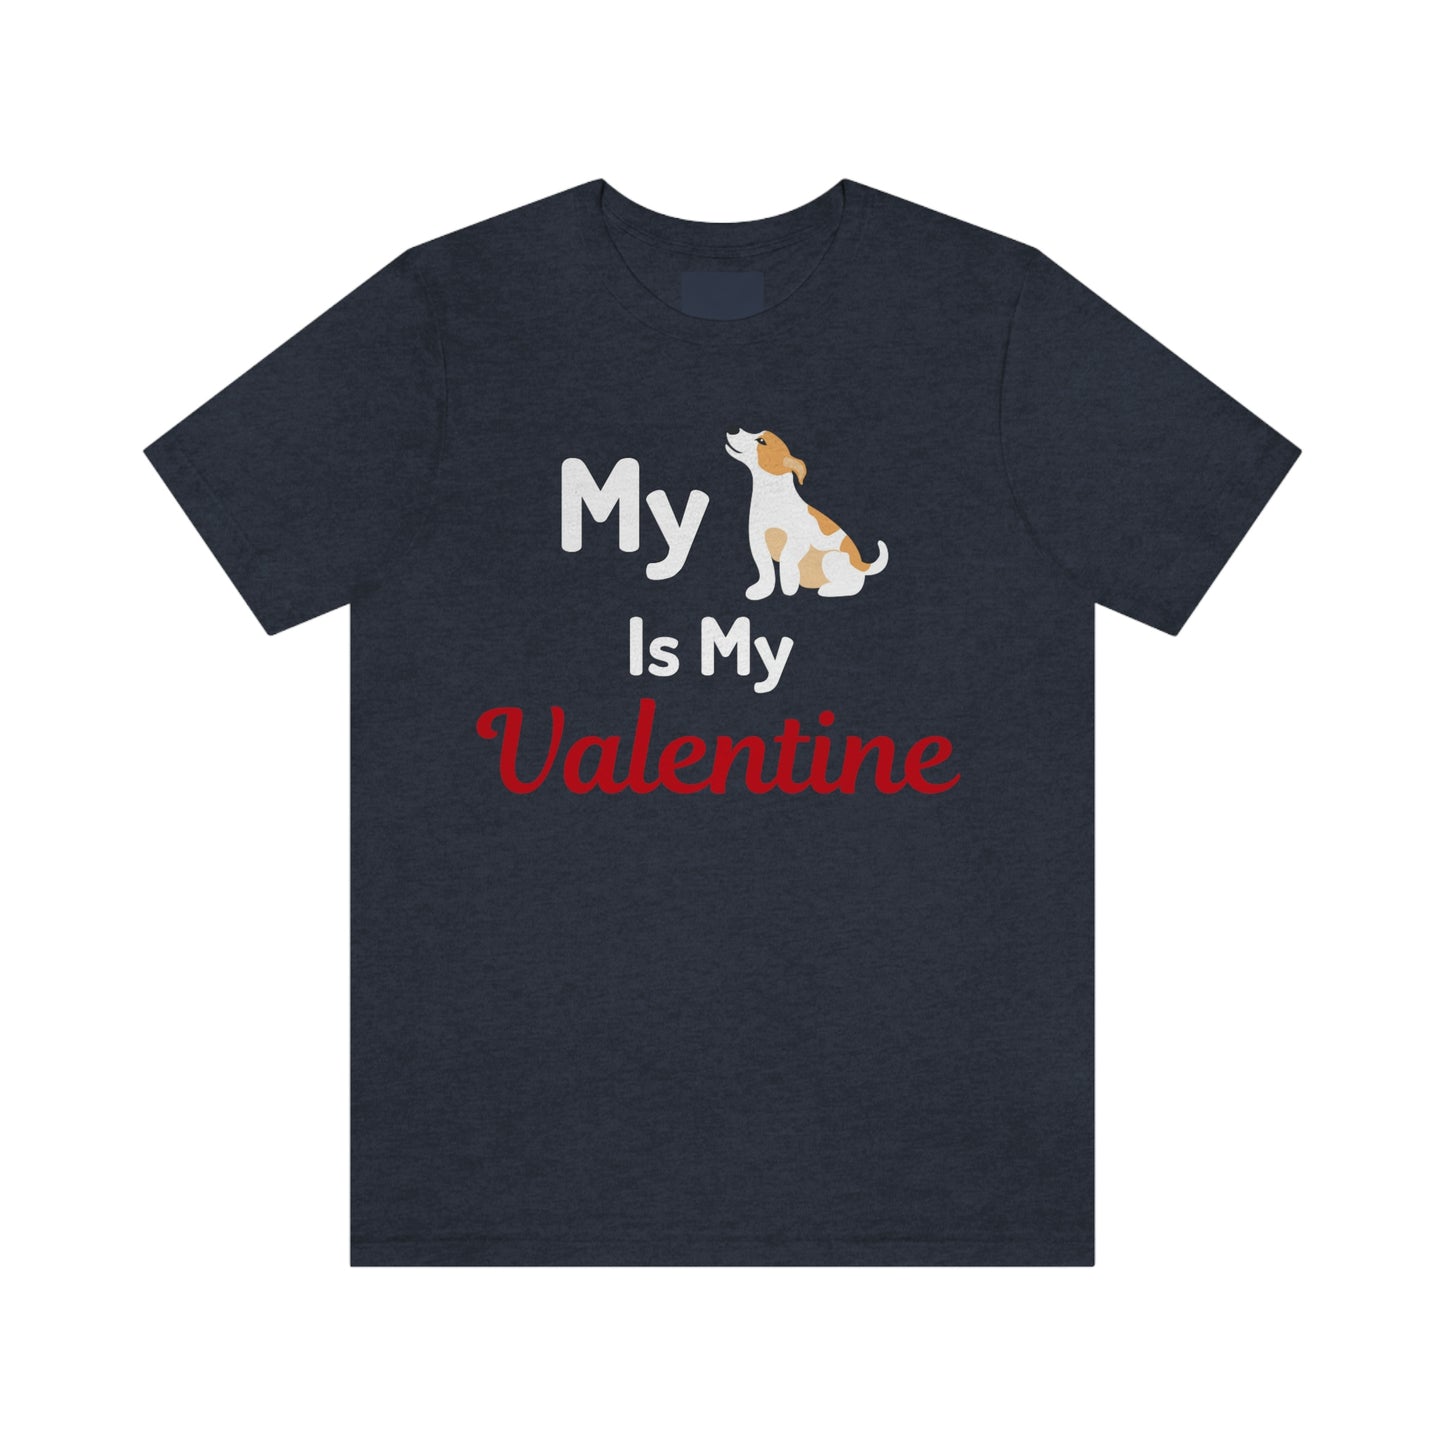 My Dog is my Valentine shirt - Pet lover shirt - dog lover shirt